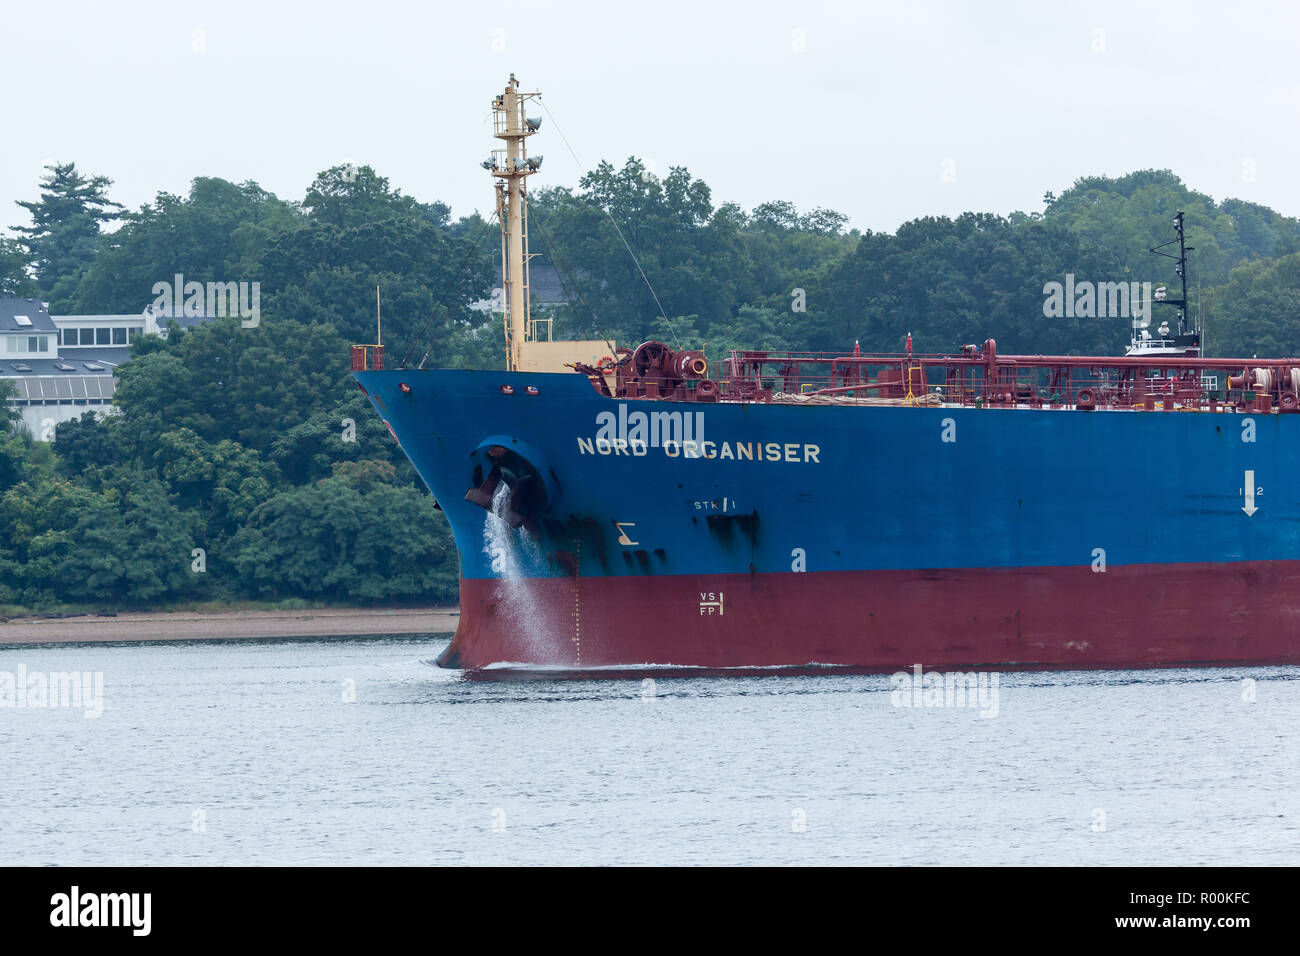 PERTH AMBOY, NEW JERSEY - August 7, 2017: The Nord Organiser Oil Tanker navigates the Arthur Kill Stock Photo